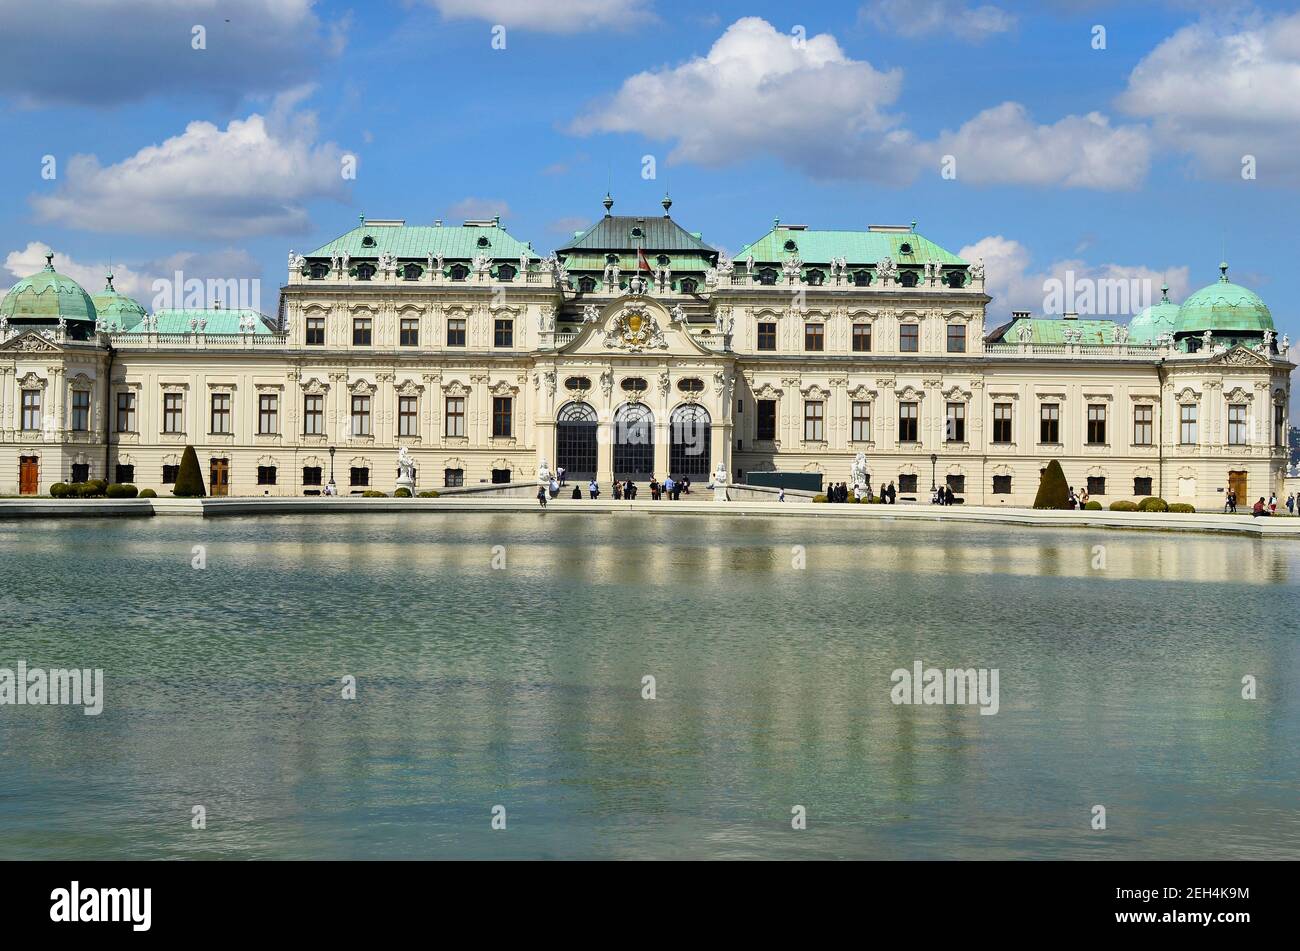 Austria, Belvedere palace in Vienna Stock Photo